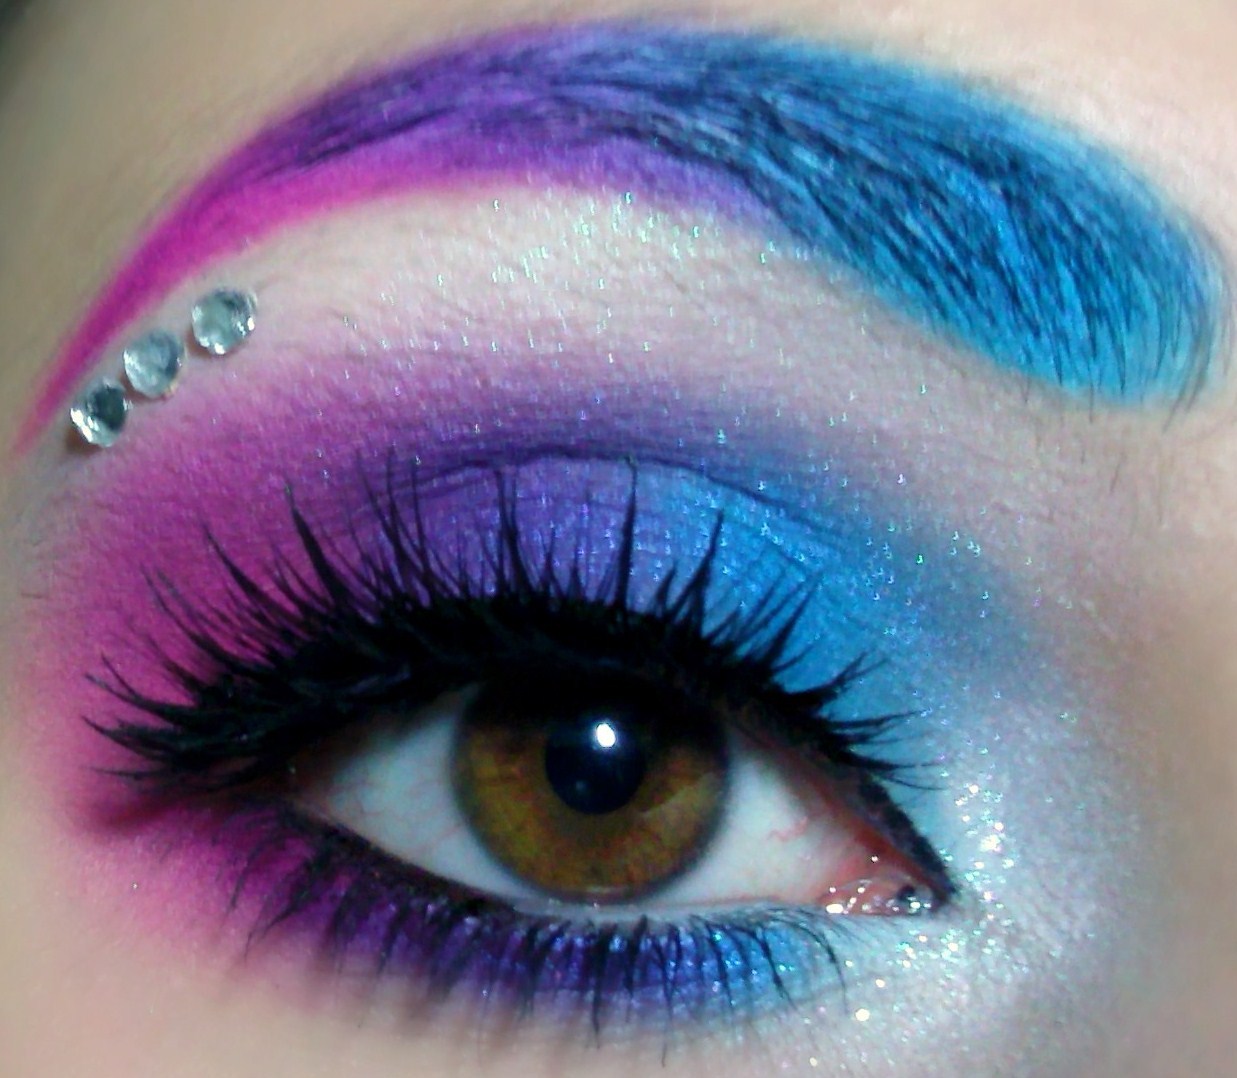 Read more about eye makeup tips & tutorials | Purple eye 